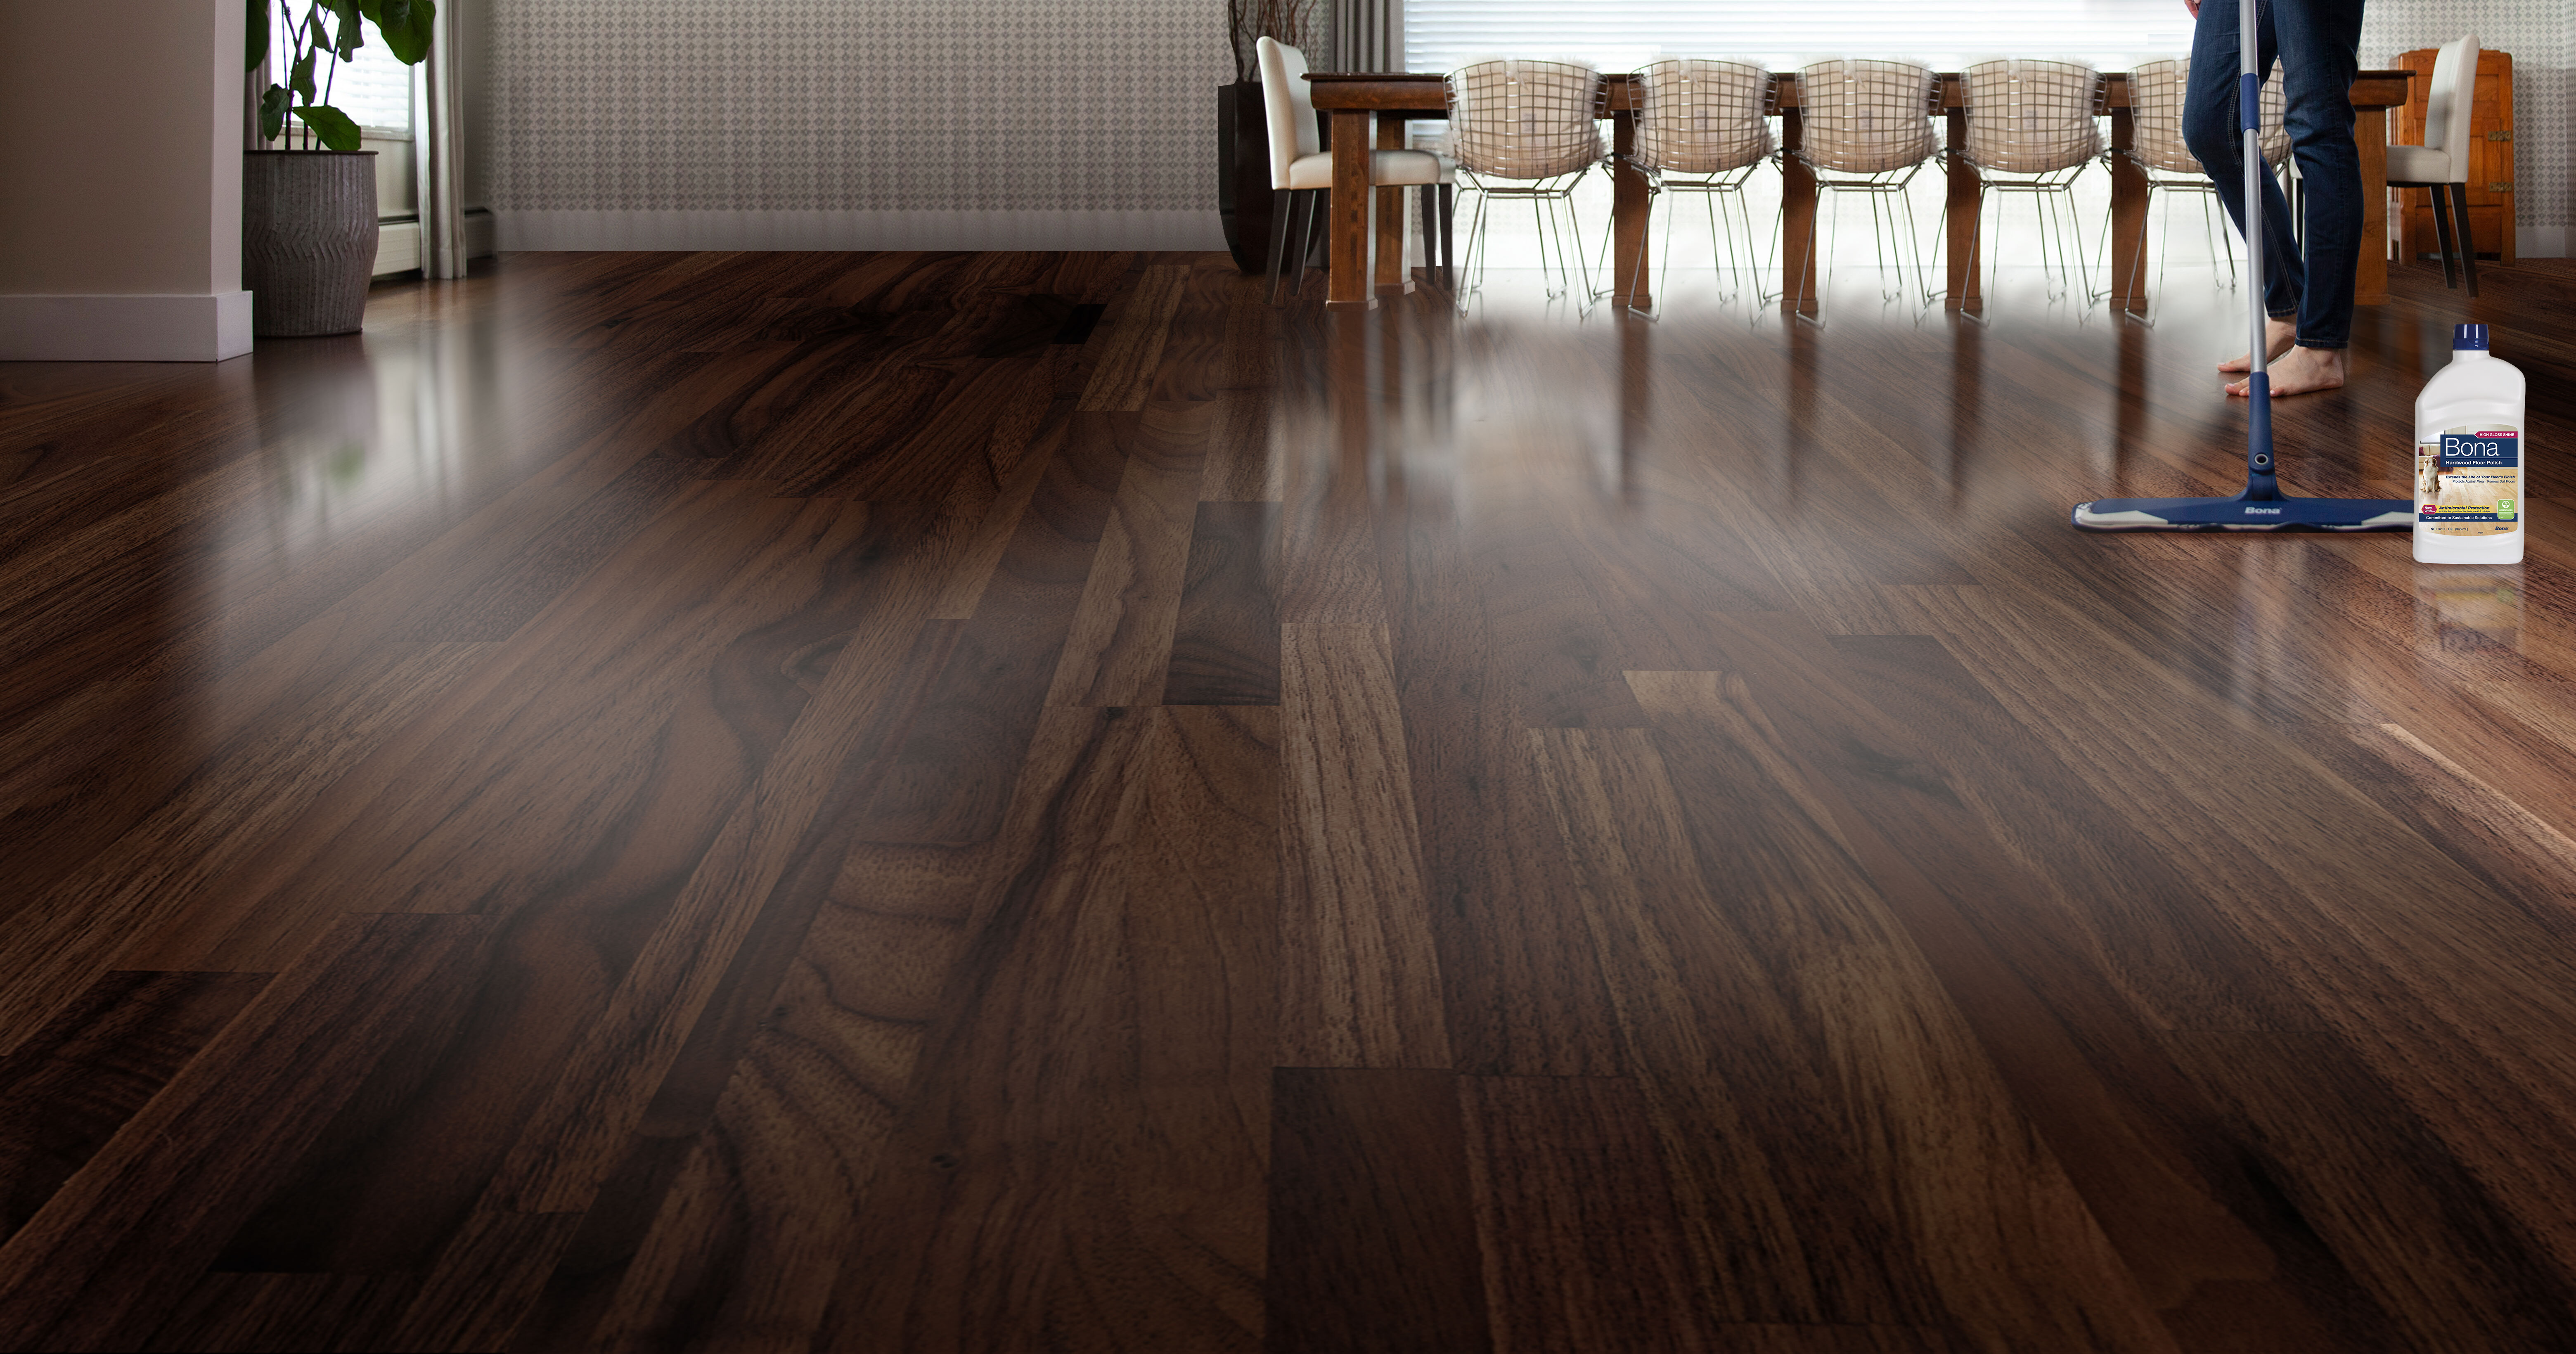 How To Polish Hardwood Floors Do S And, What To Use On Hardwood Floors To Make Them Shine